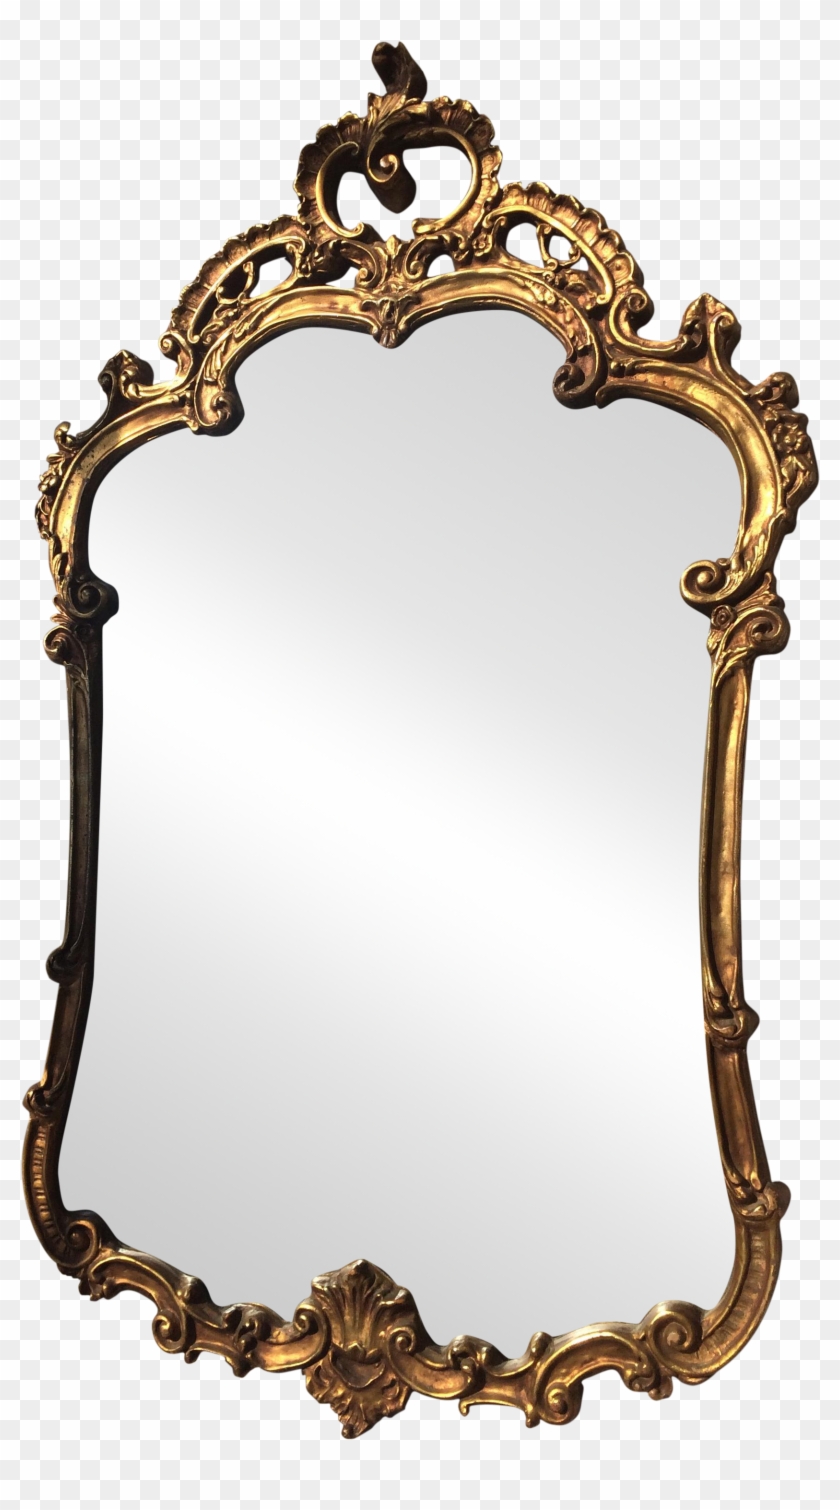 Vintage Baroque Gilt-framed Mirror - Old Baroque Mirror Clipart #2447402